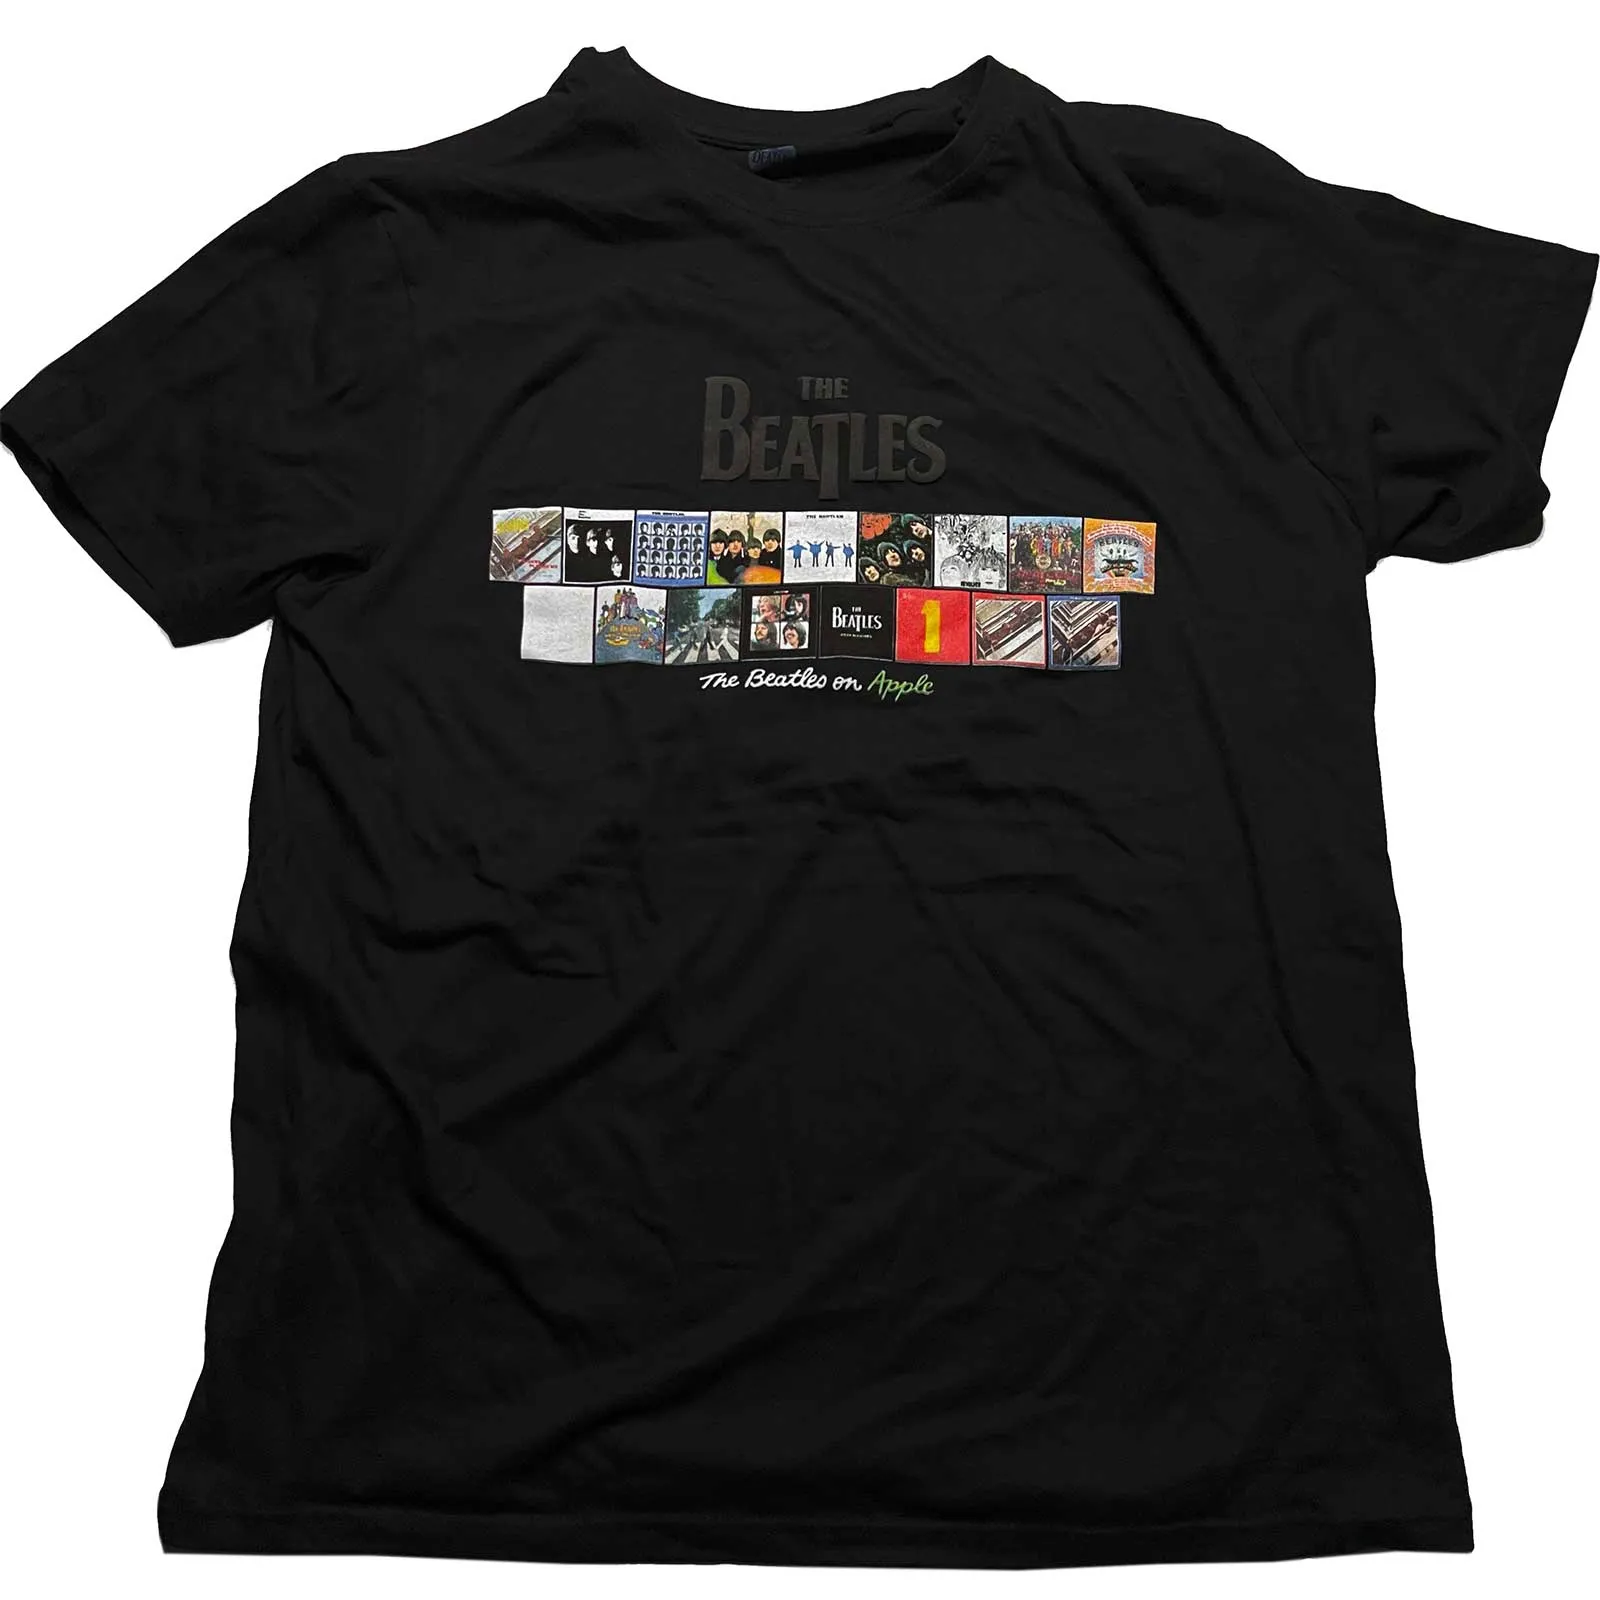 The Beatles - Unisex T-Shirt Albums on Apple Puff Print artwork